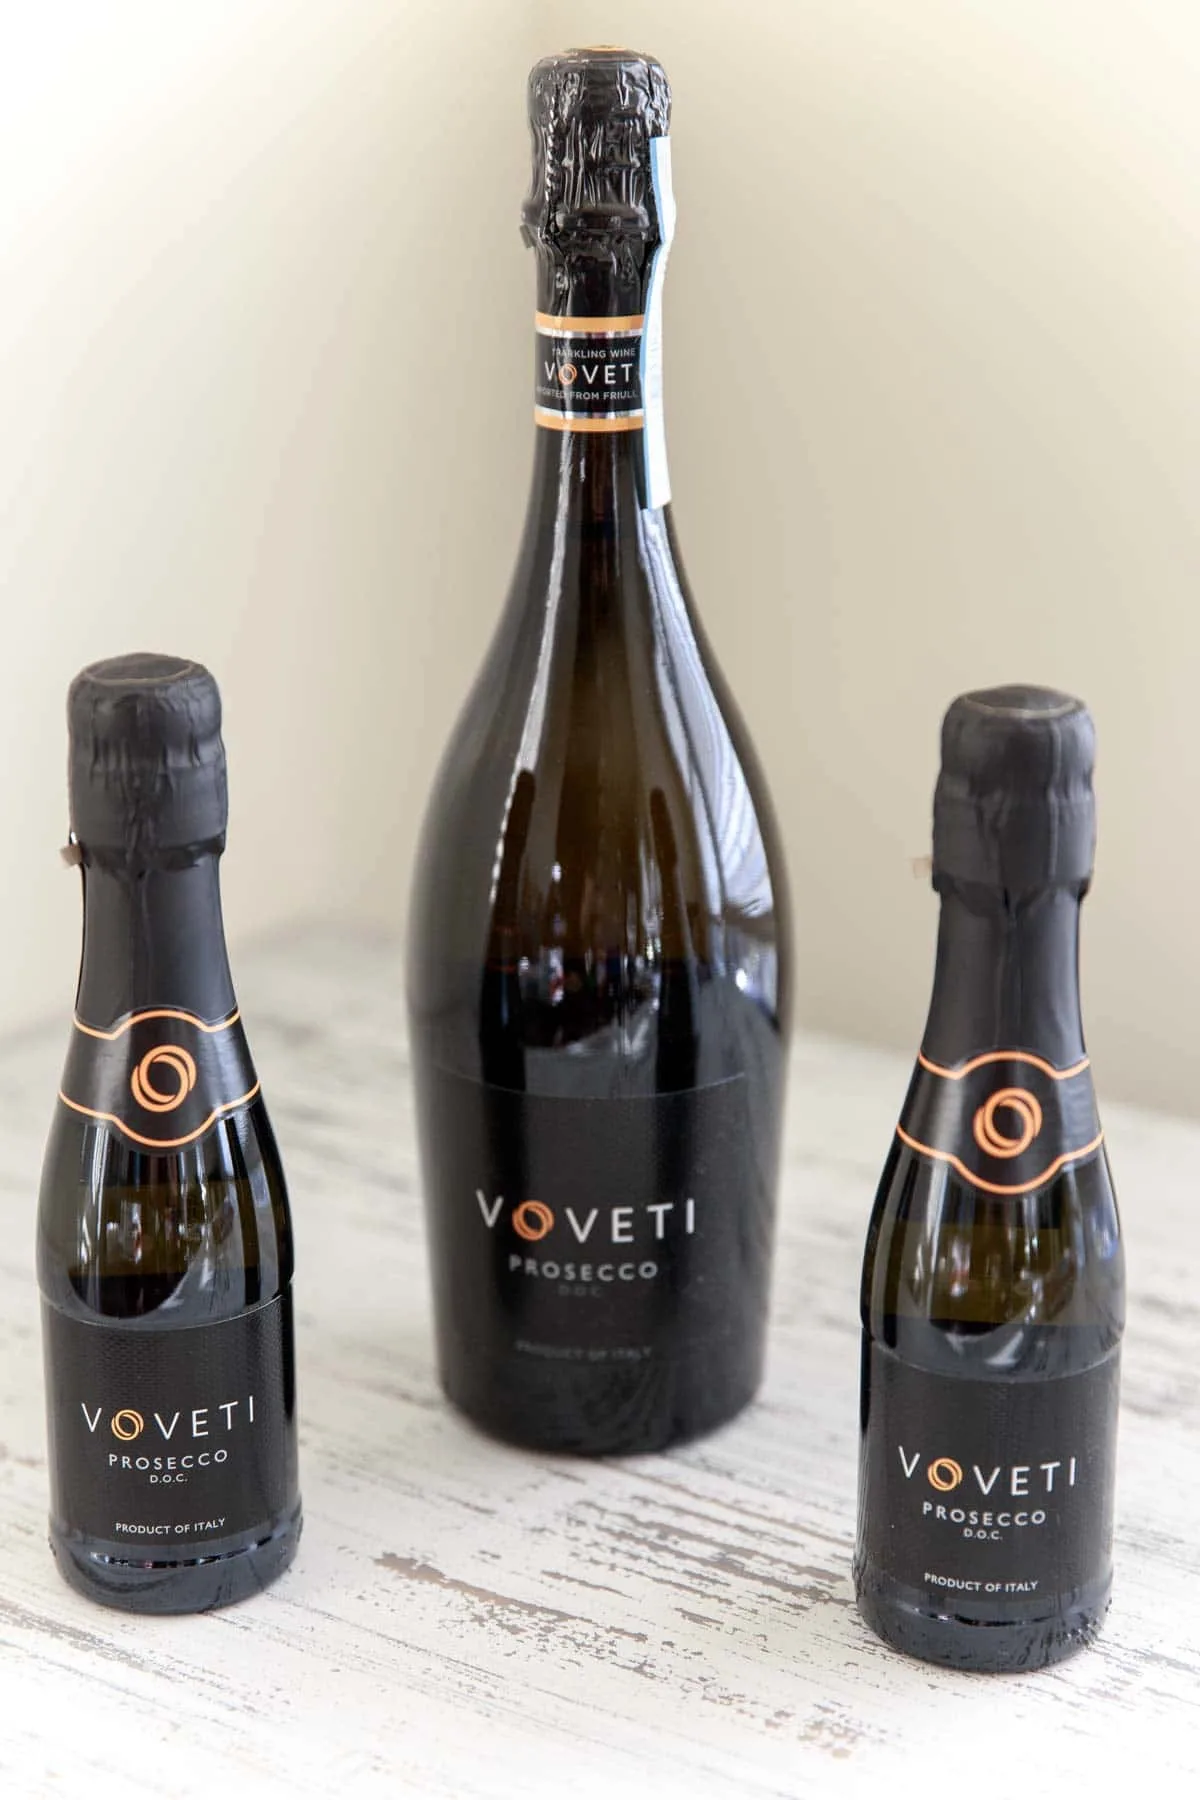 bottle of  Voveti Prosecco next to 2 mini bottles